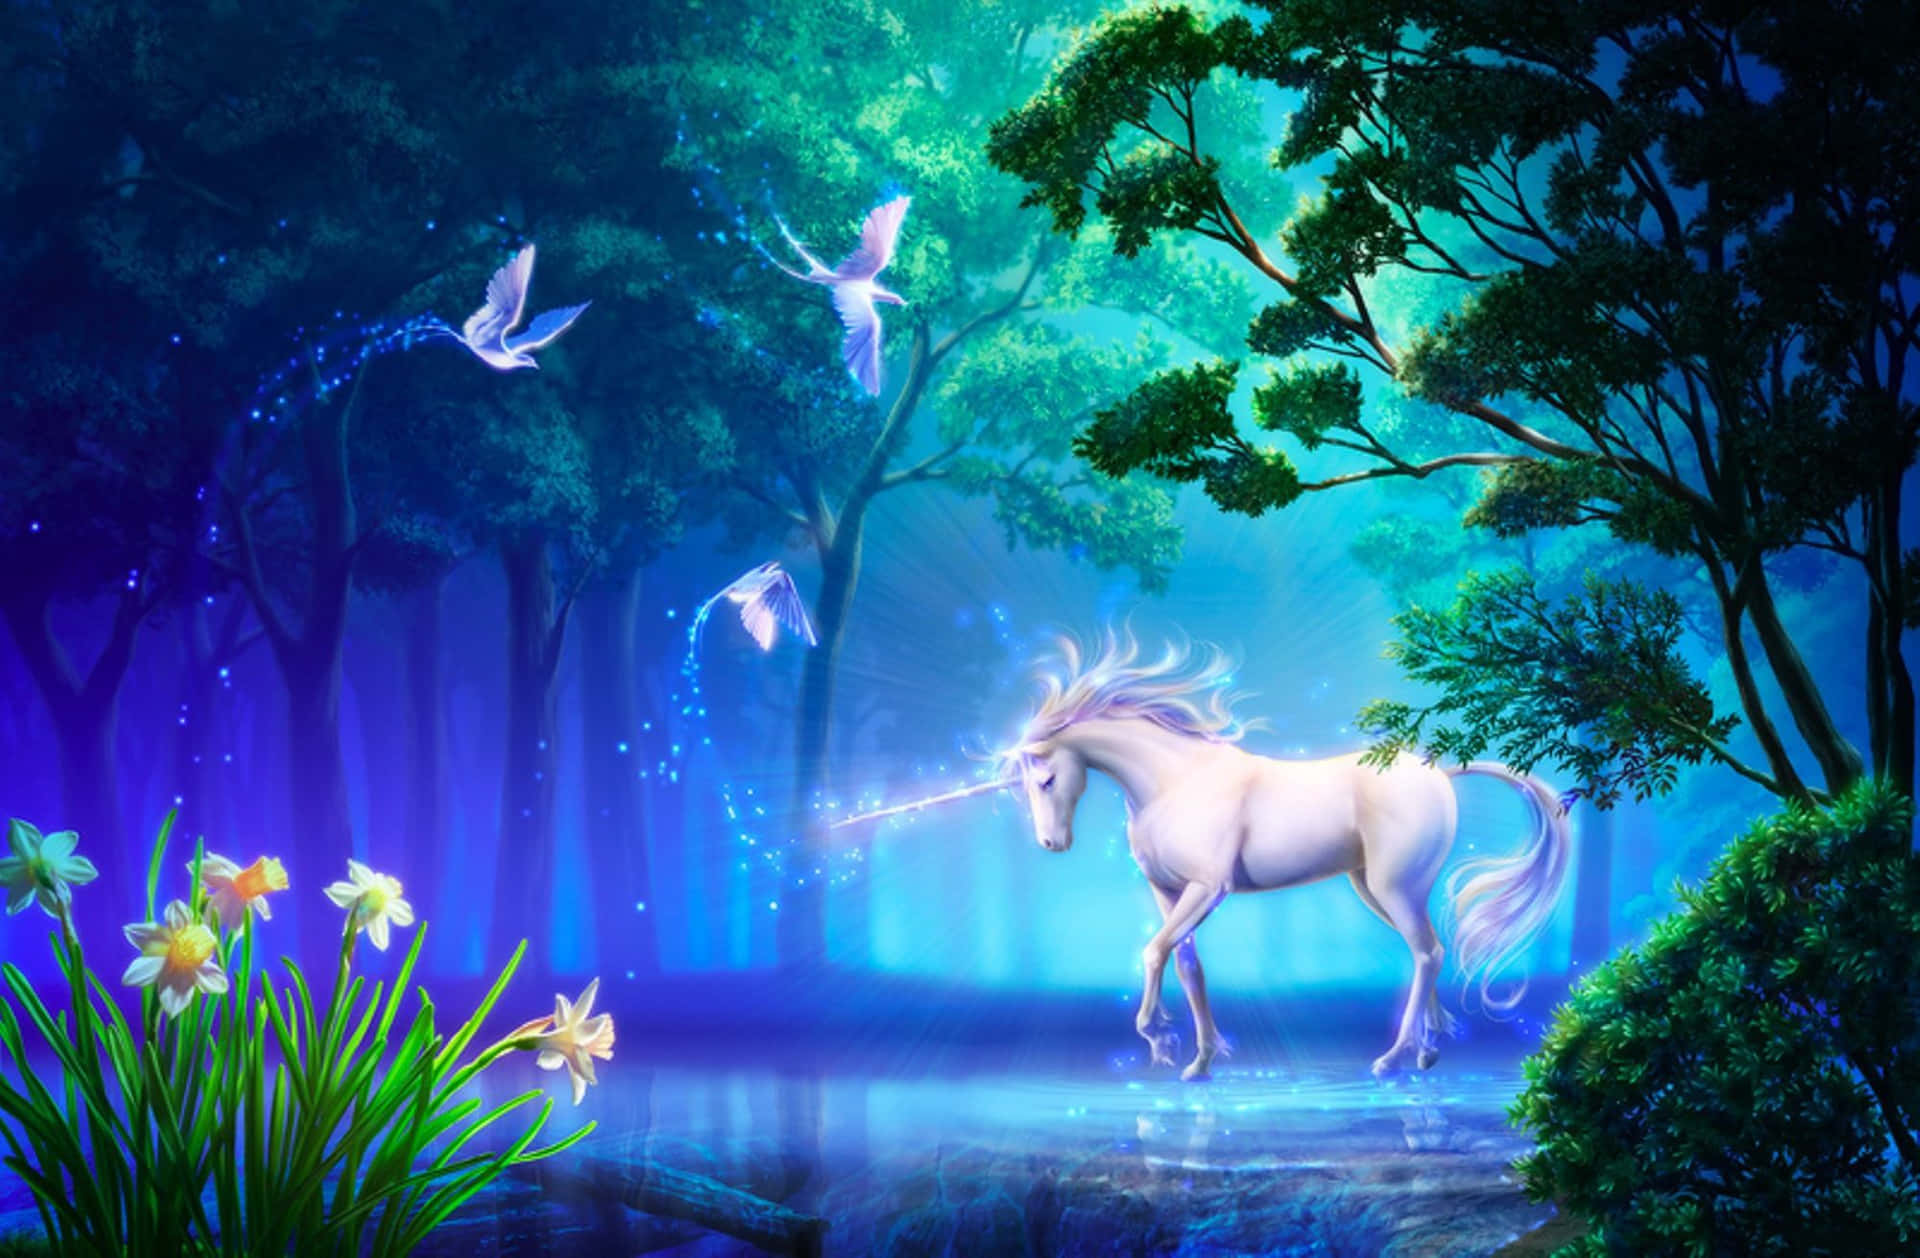 Magical 3D Unicorn in a Fantasy World Wallpaper